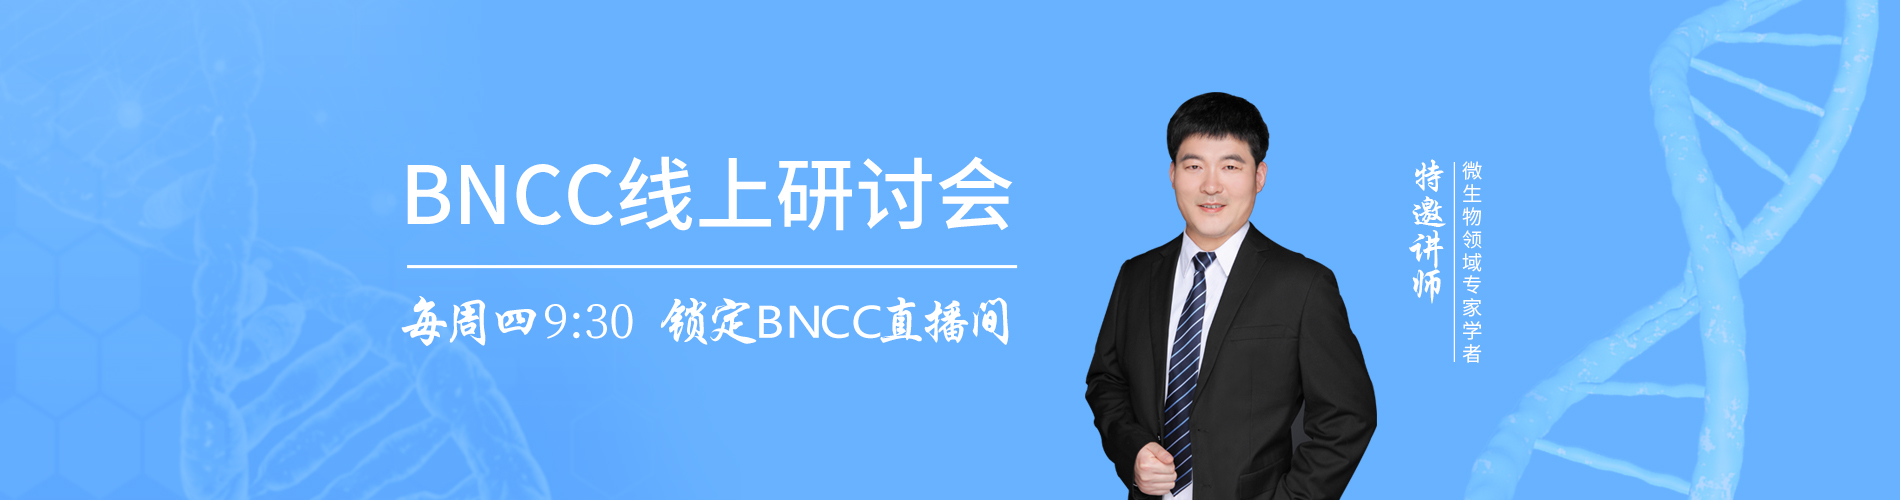 BNCC线上研讨会